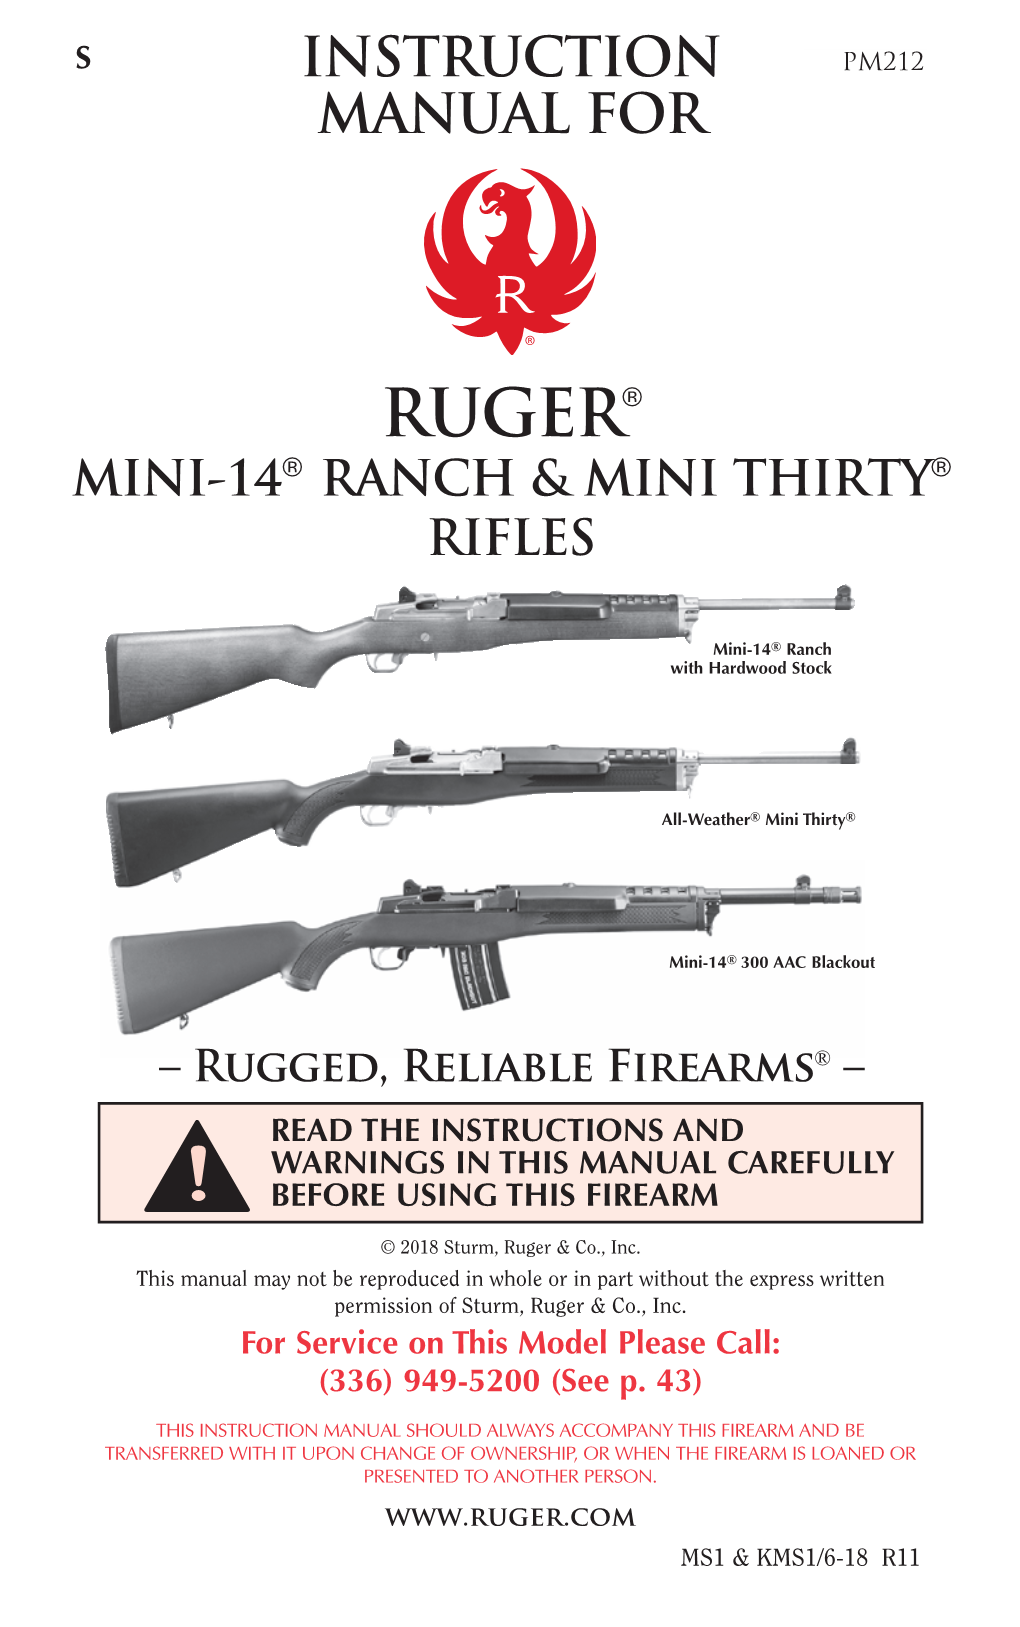 Instruction Manual for Mini-14® Ranch & Mini Thirty® Rifles